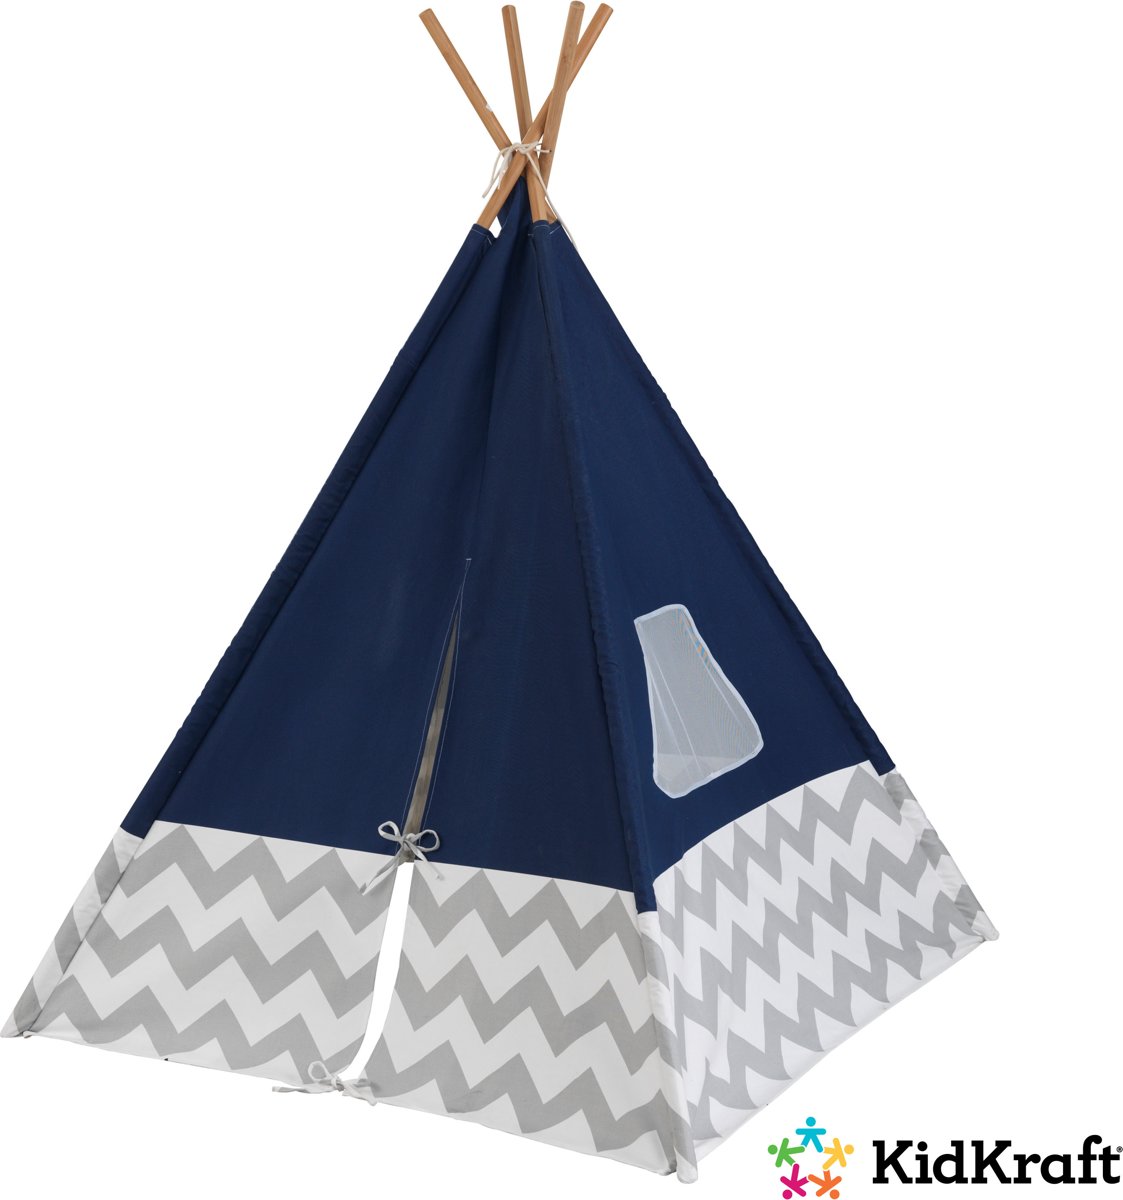 KidKraft Tipi Deluxe marineblauw - Tipi tent